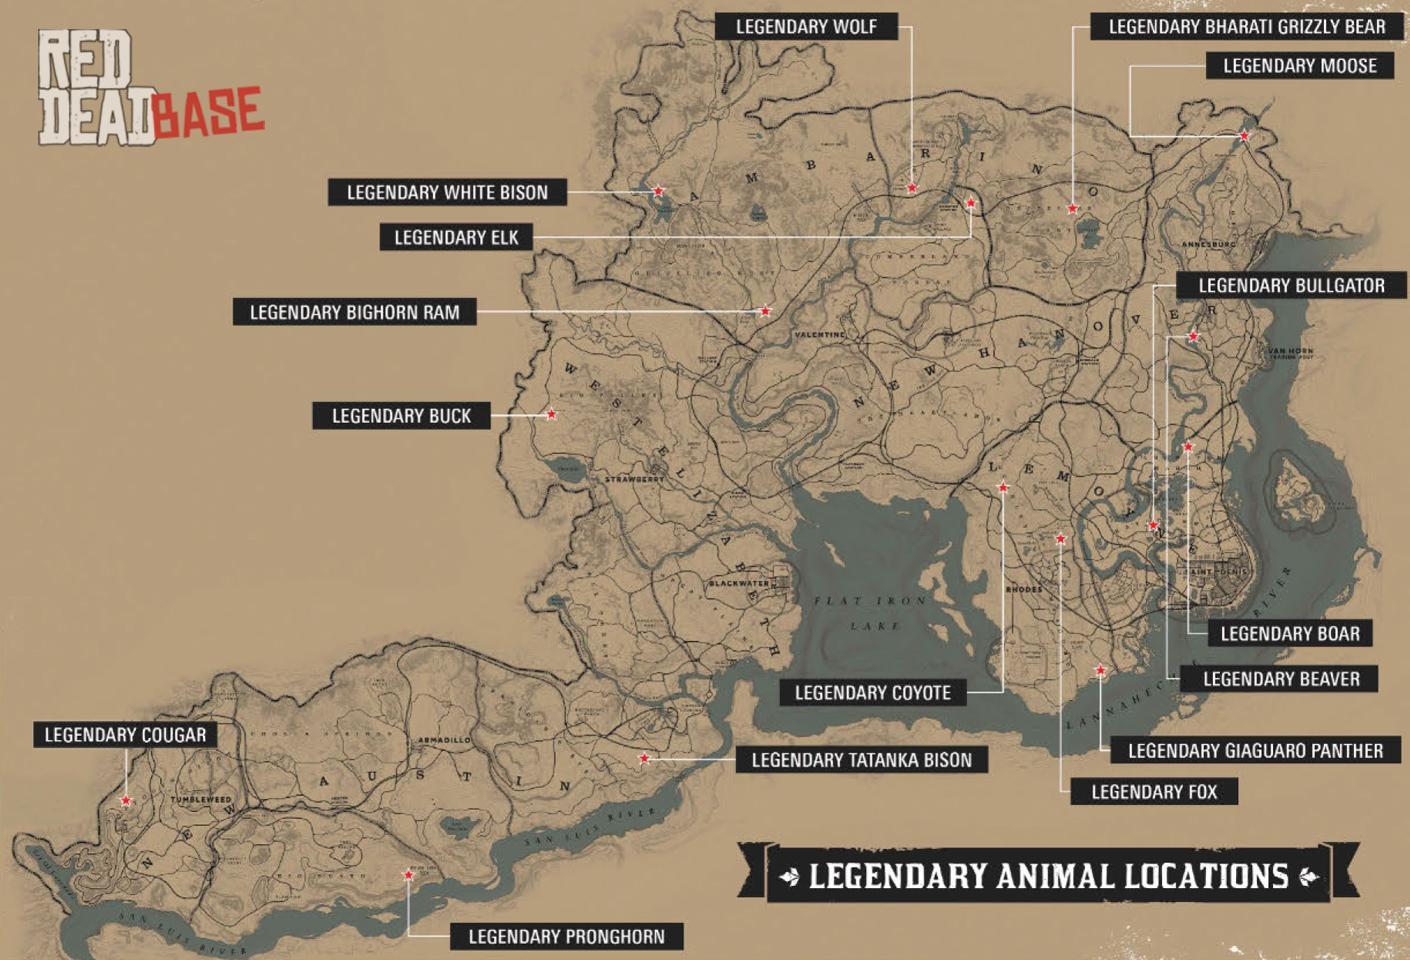 Legendary Bull Gator - Map Location in RDR2